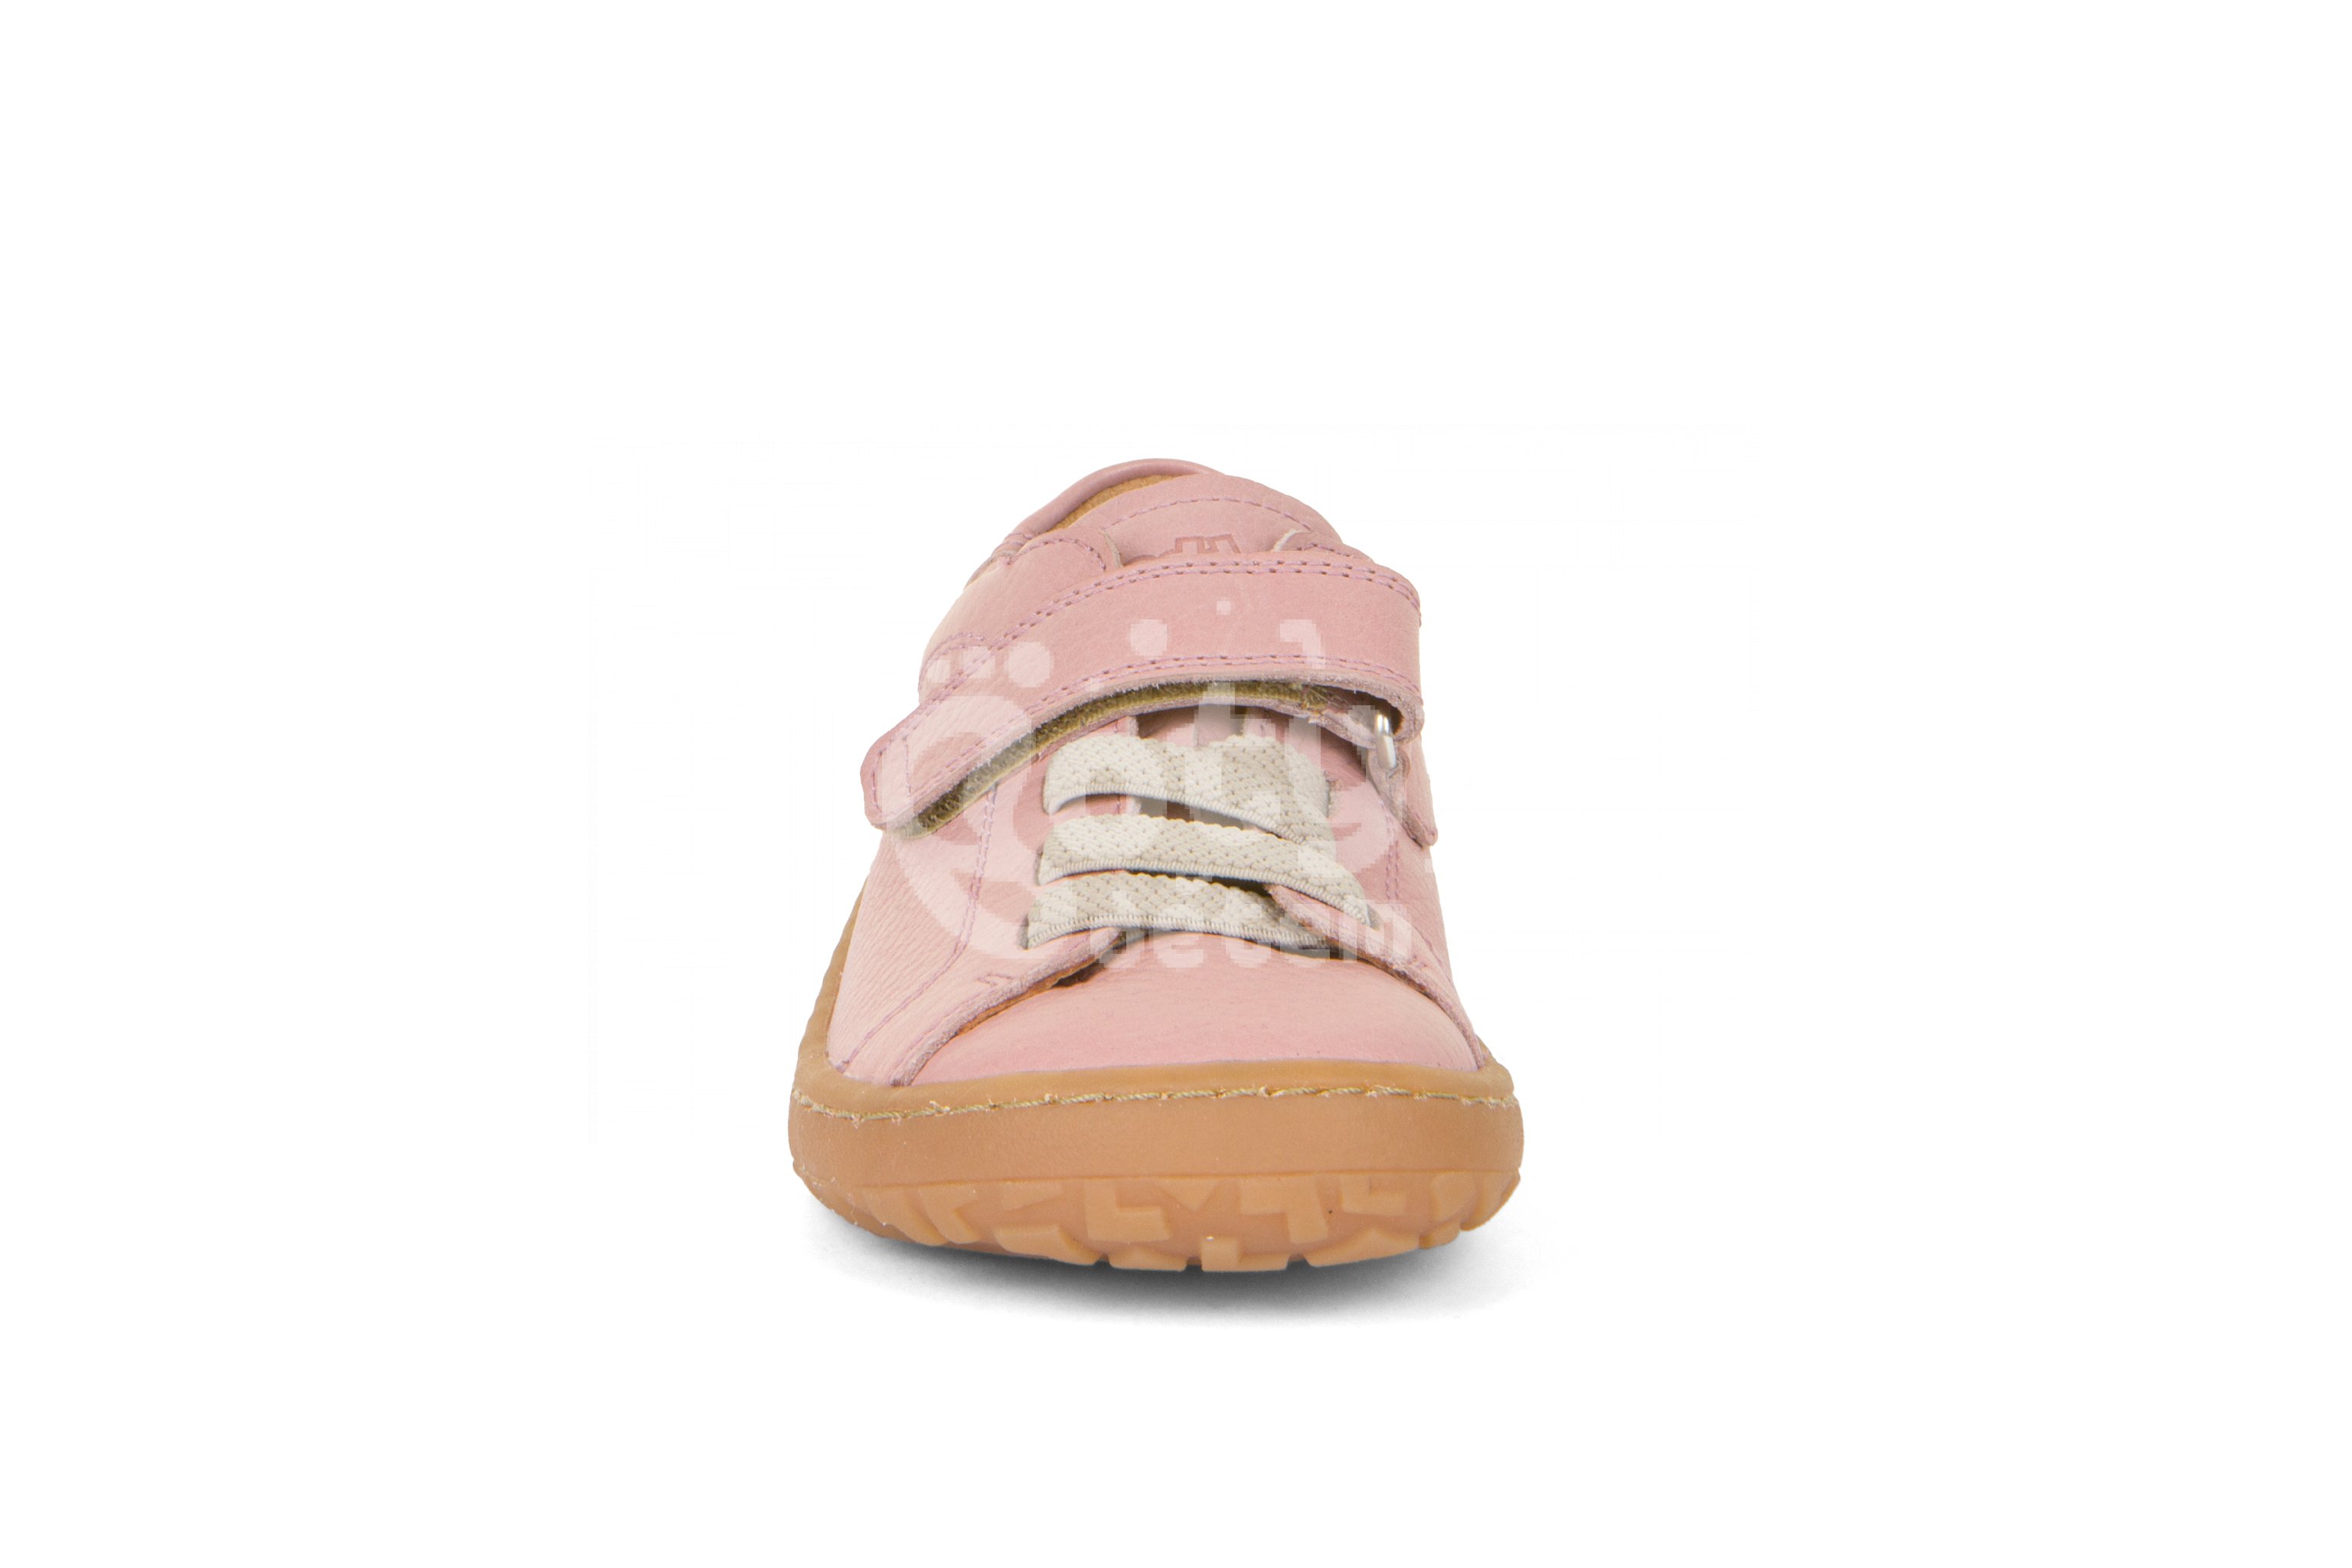 Froddo barefoot boty G3130221-8 Pink